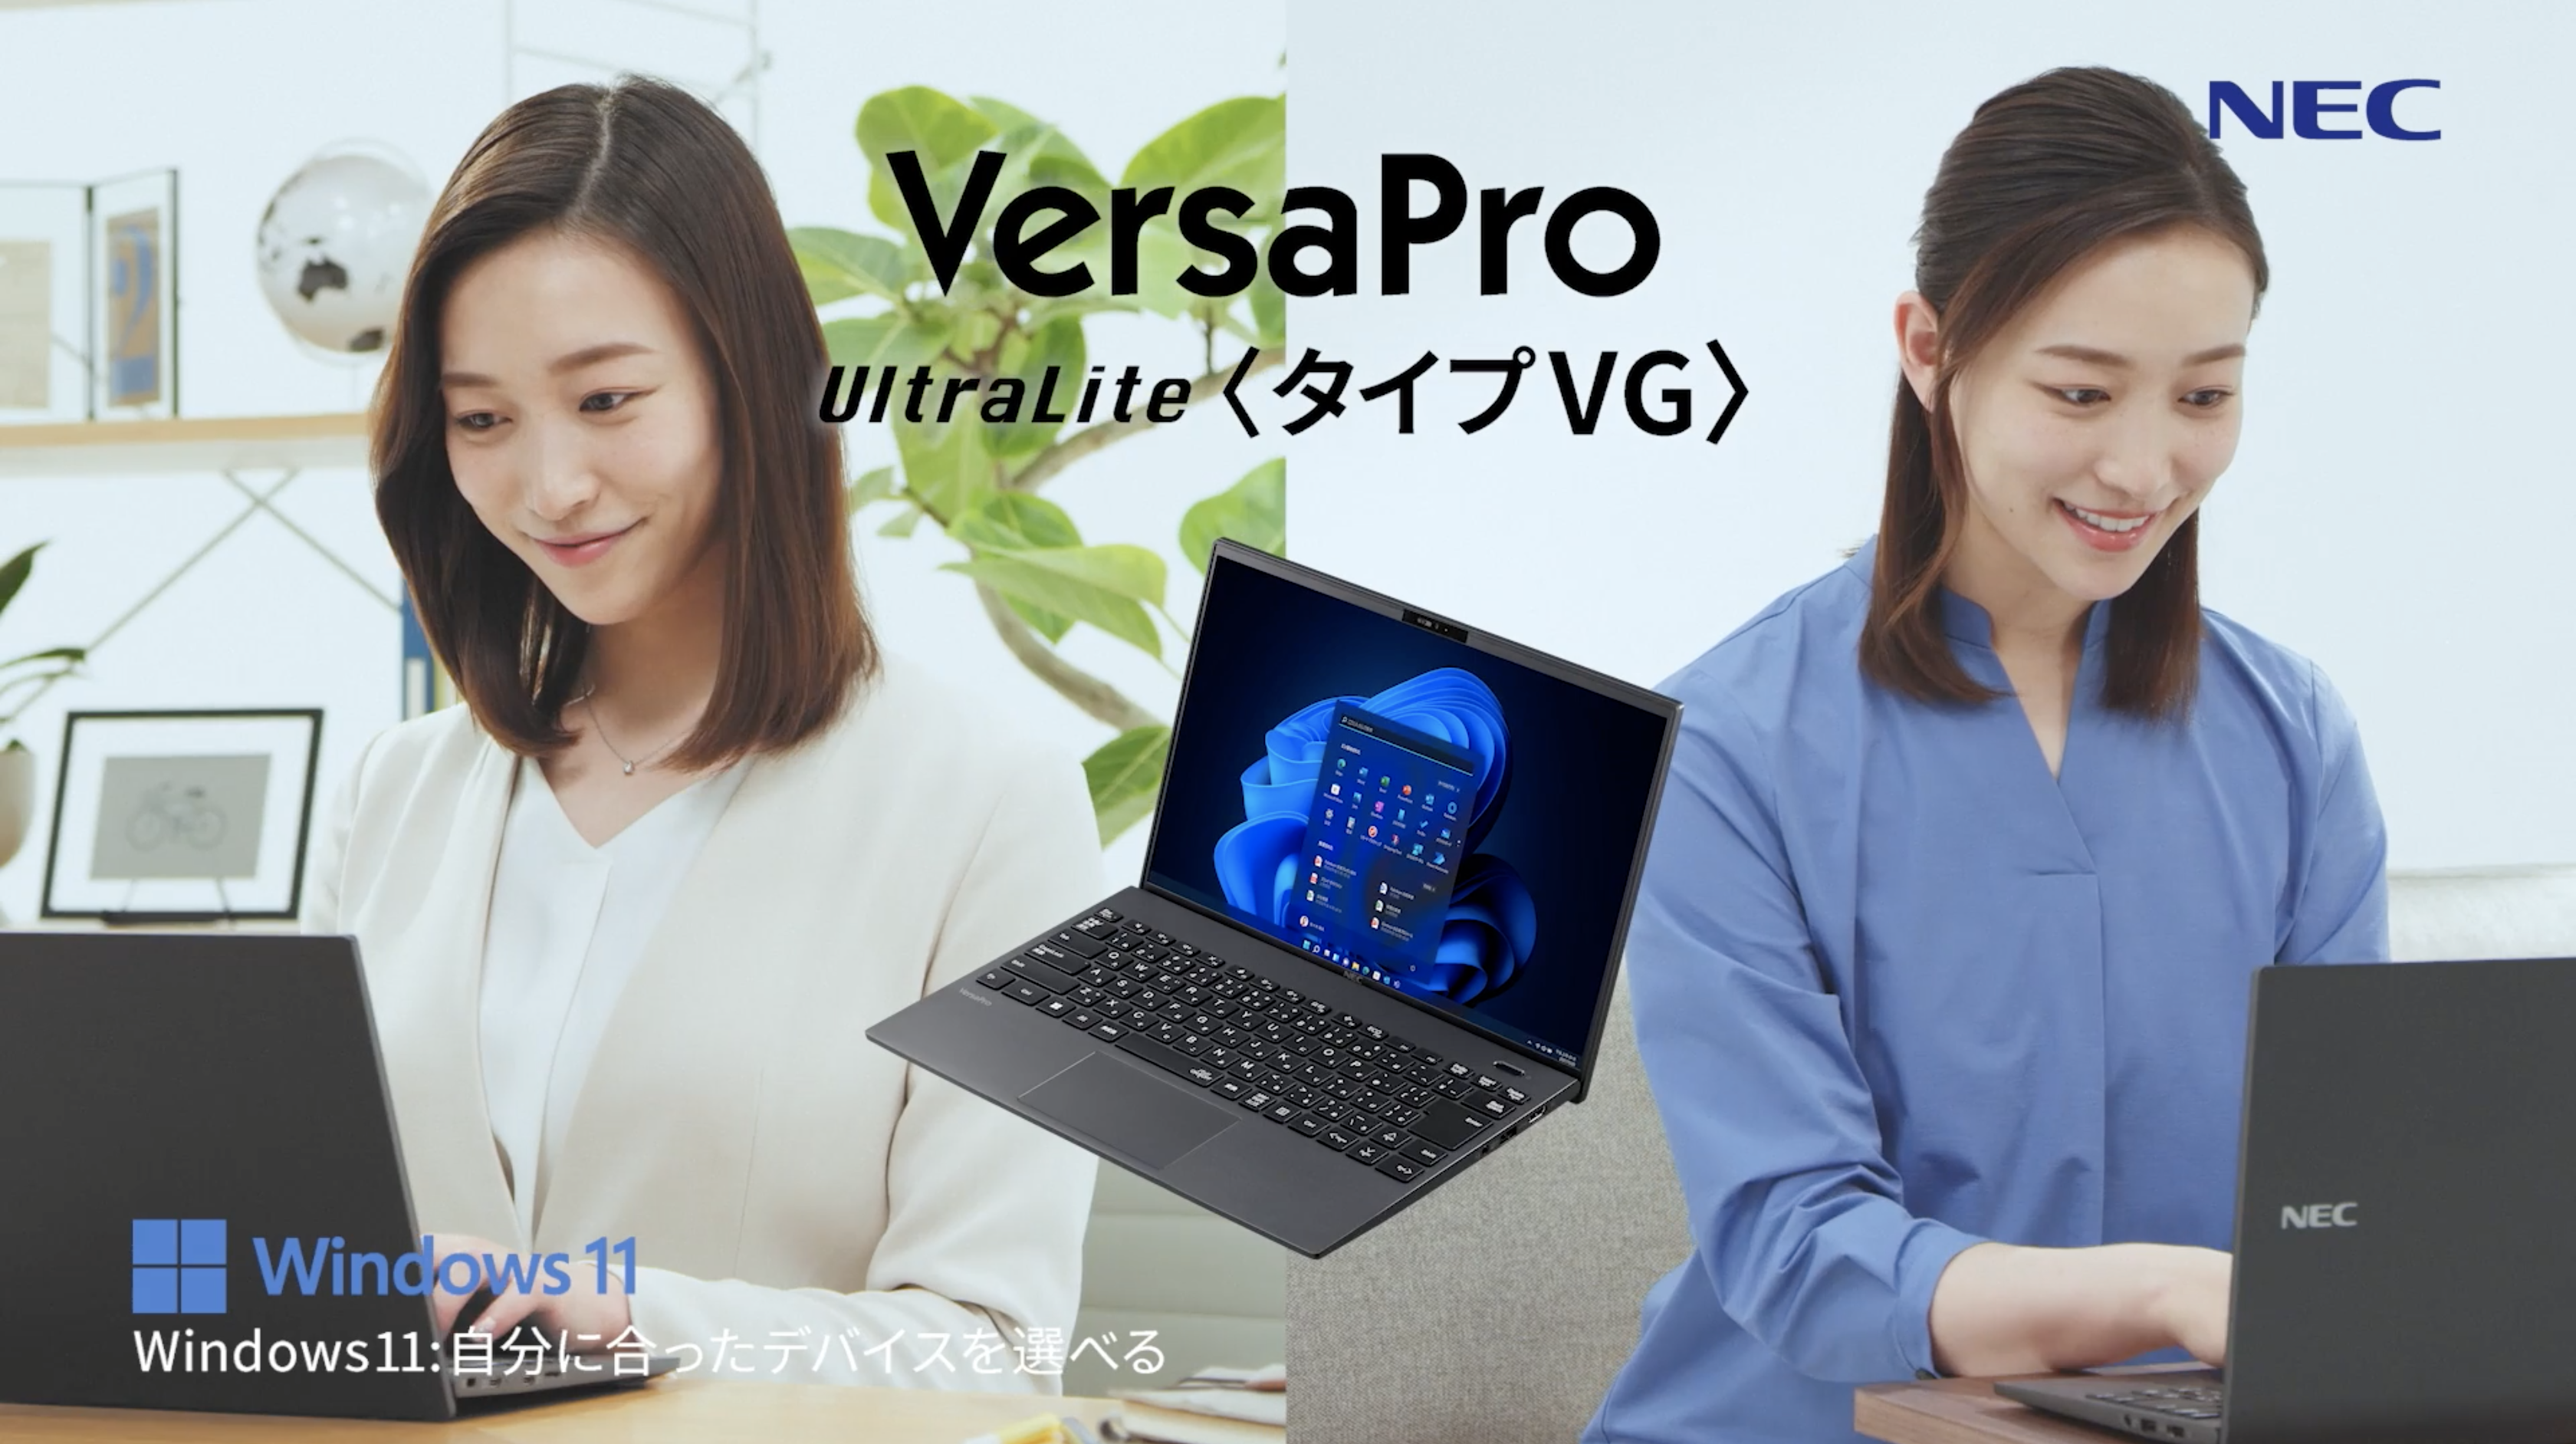 NEC 「VersaPro UltraLiteタイプVG 」Web CM